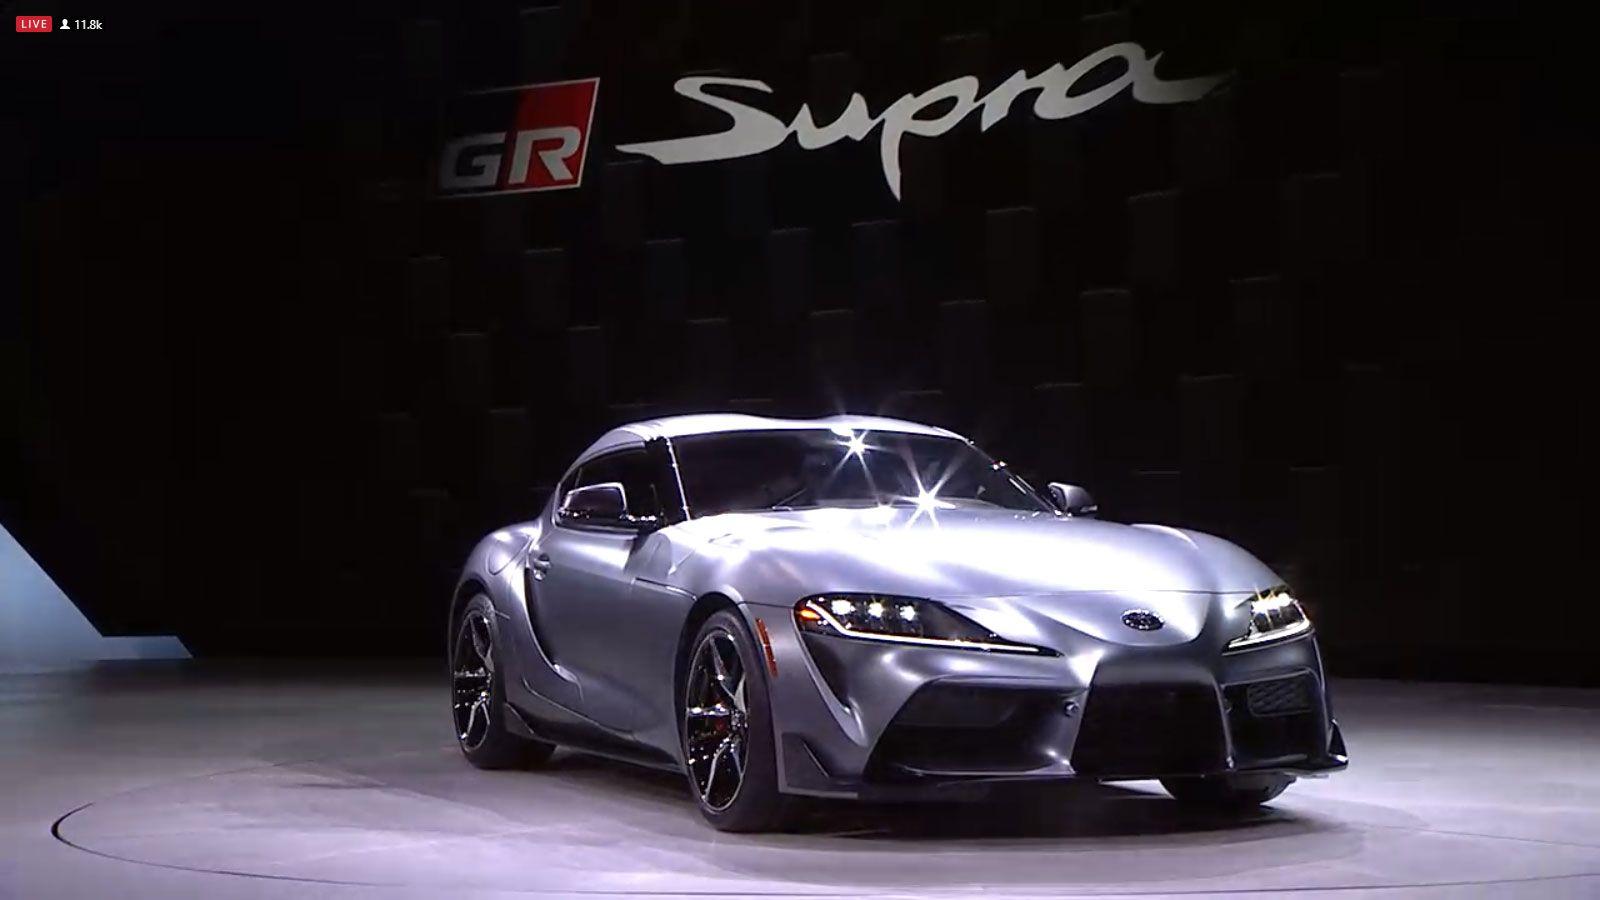 NAIAS News: 2020 Toyota Supra Launches $990. 4.1 sec. 335hp